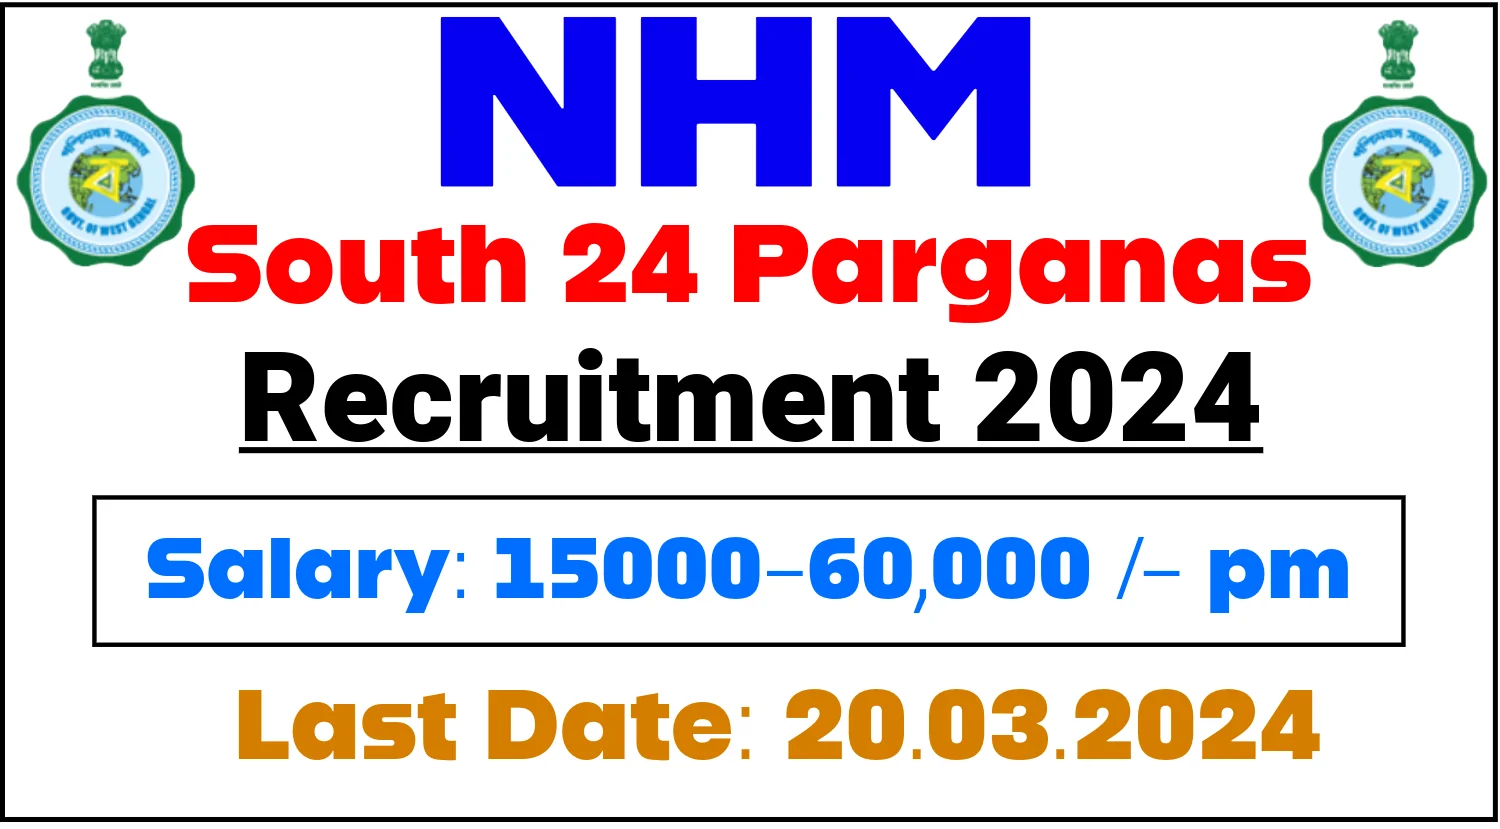 NHM South 24 Parganas Recruitment 2024 for Nurse, Technician & Other Posts